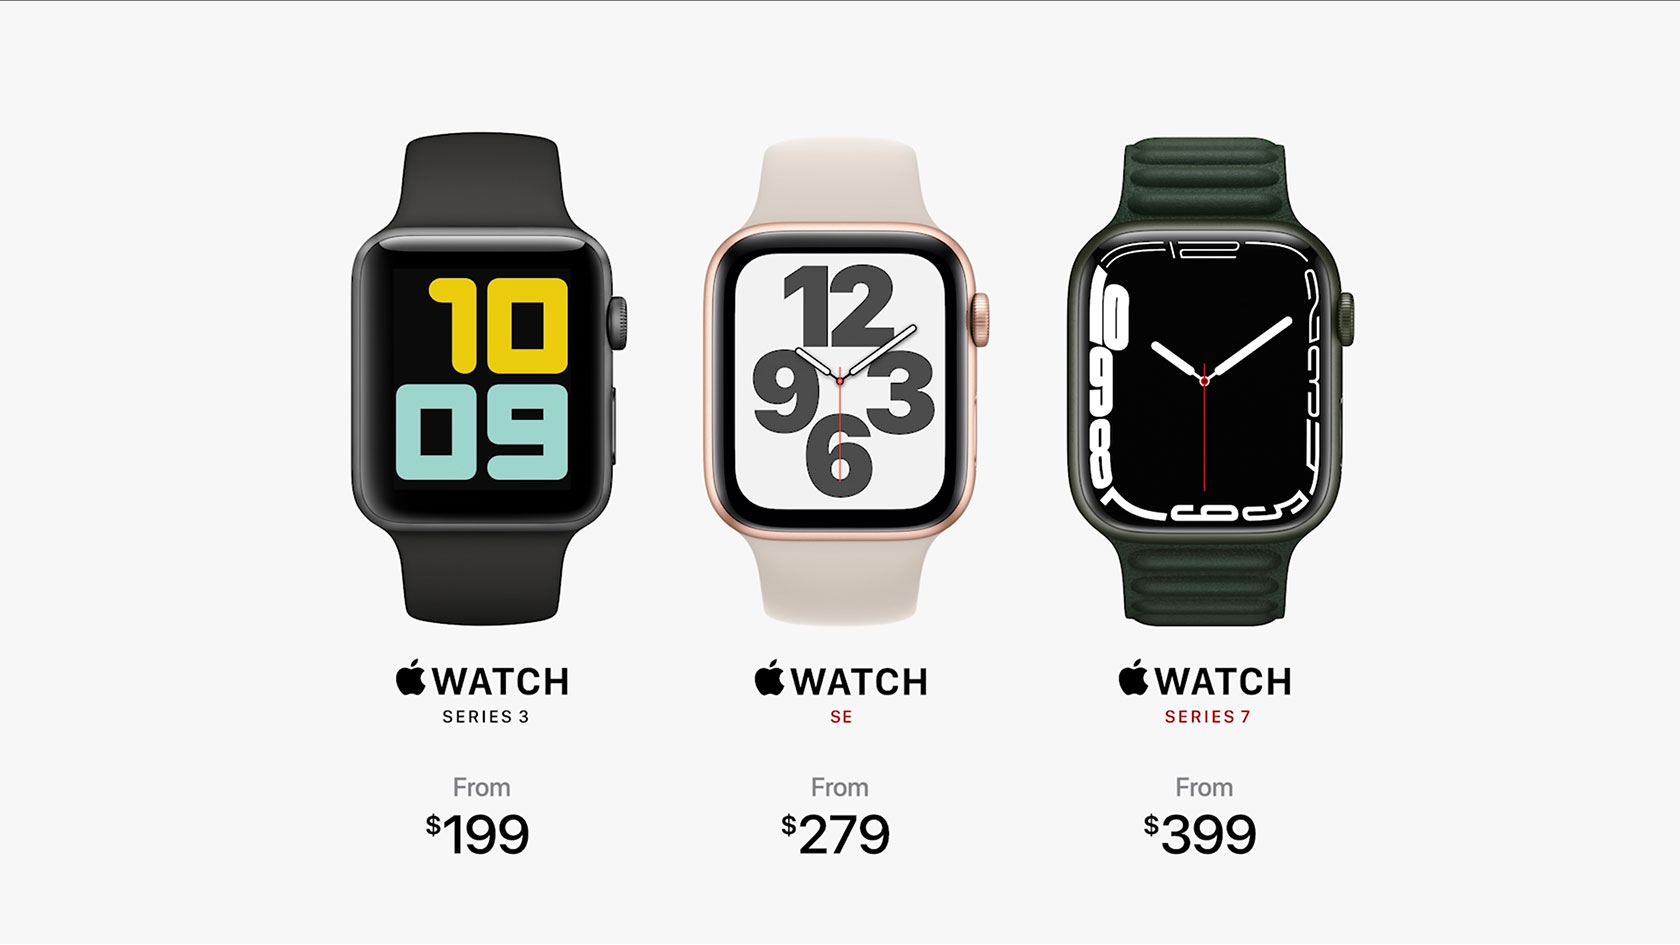 https://techcrunch.com/wp-content/uploads/2021/09/apple-watch-series-7-price.jpg